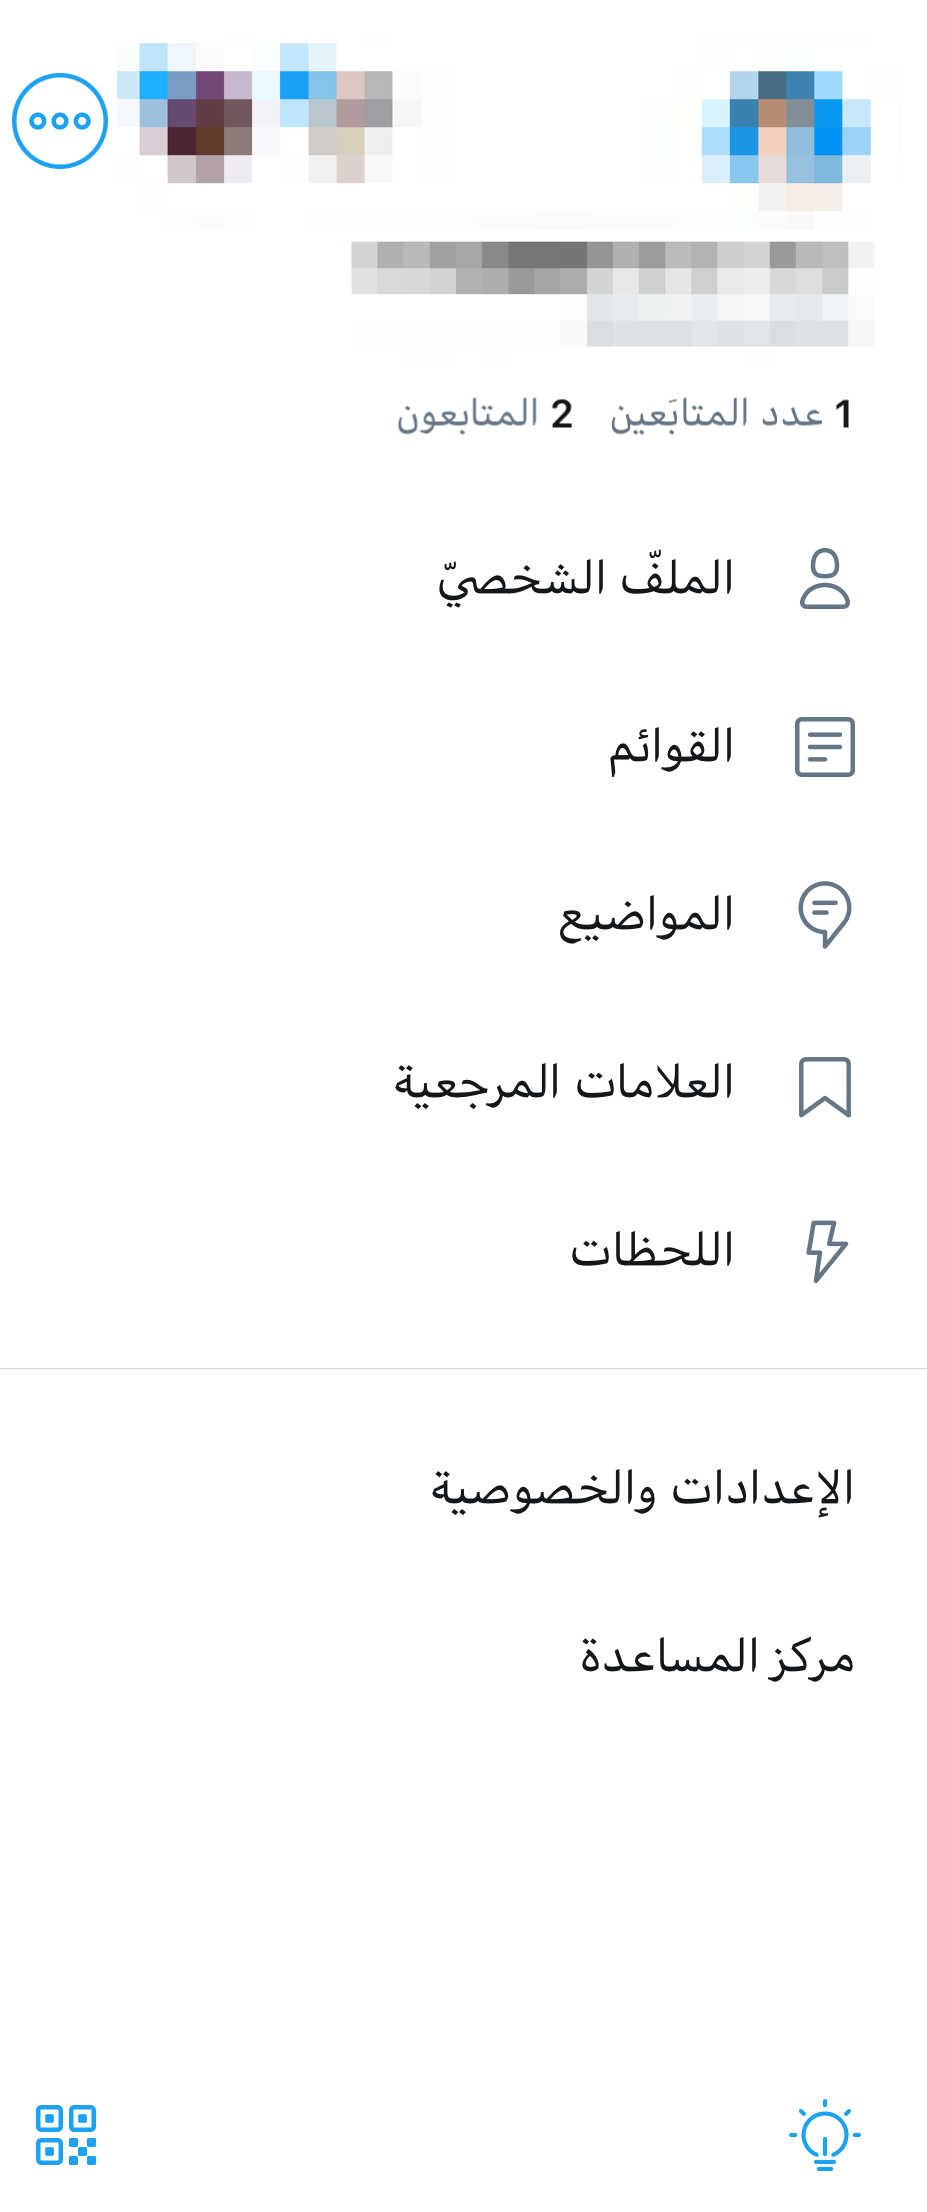 Twitter言語設定を日本語へ変更 勝手にアラビア語に変わる問題も簡単解決 作業ロケット